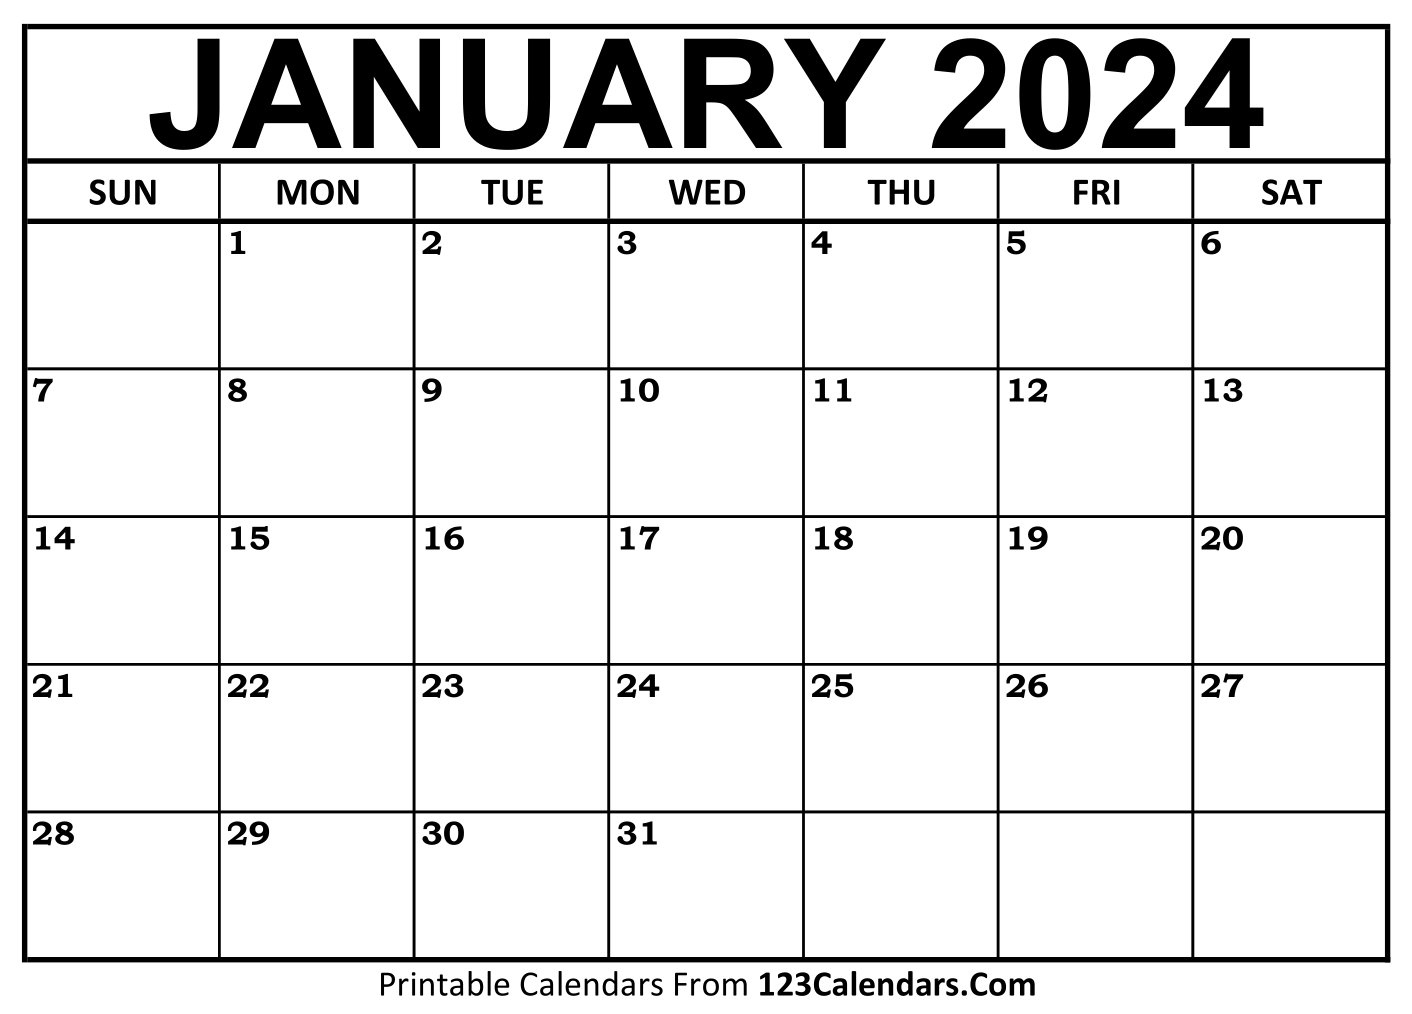 Printable January 2024 Calendar Templates - 123Calendars | Printable Calendar Pages 2024 Free